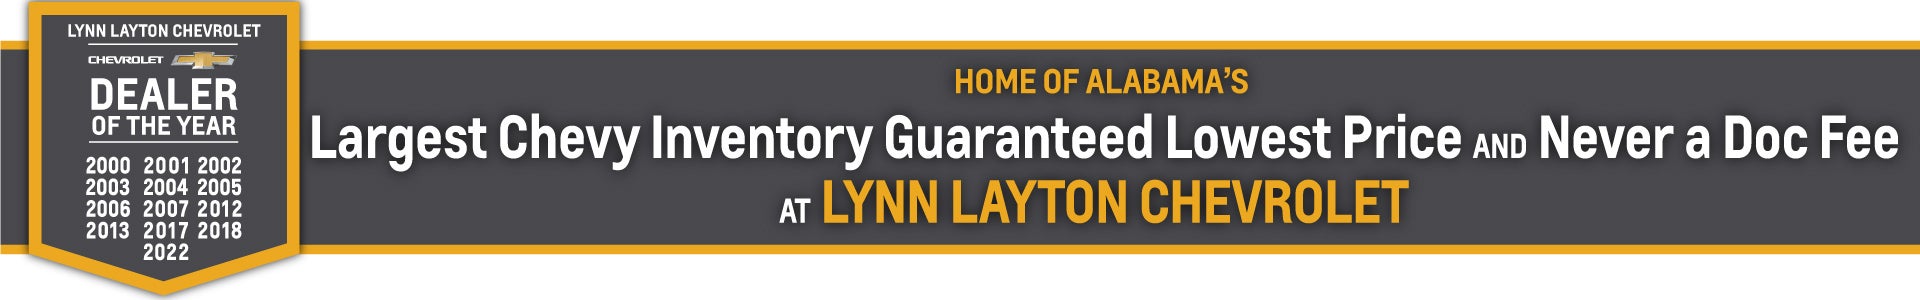 Lynn Layton Chevrolet Dealer of the Year Banner